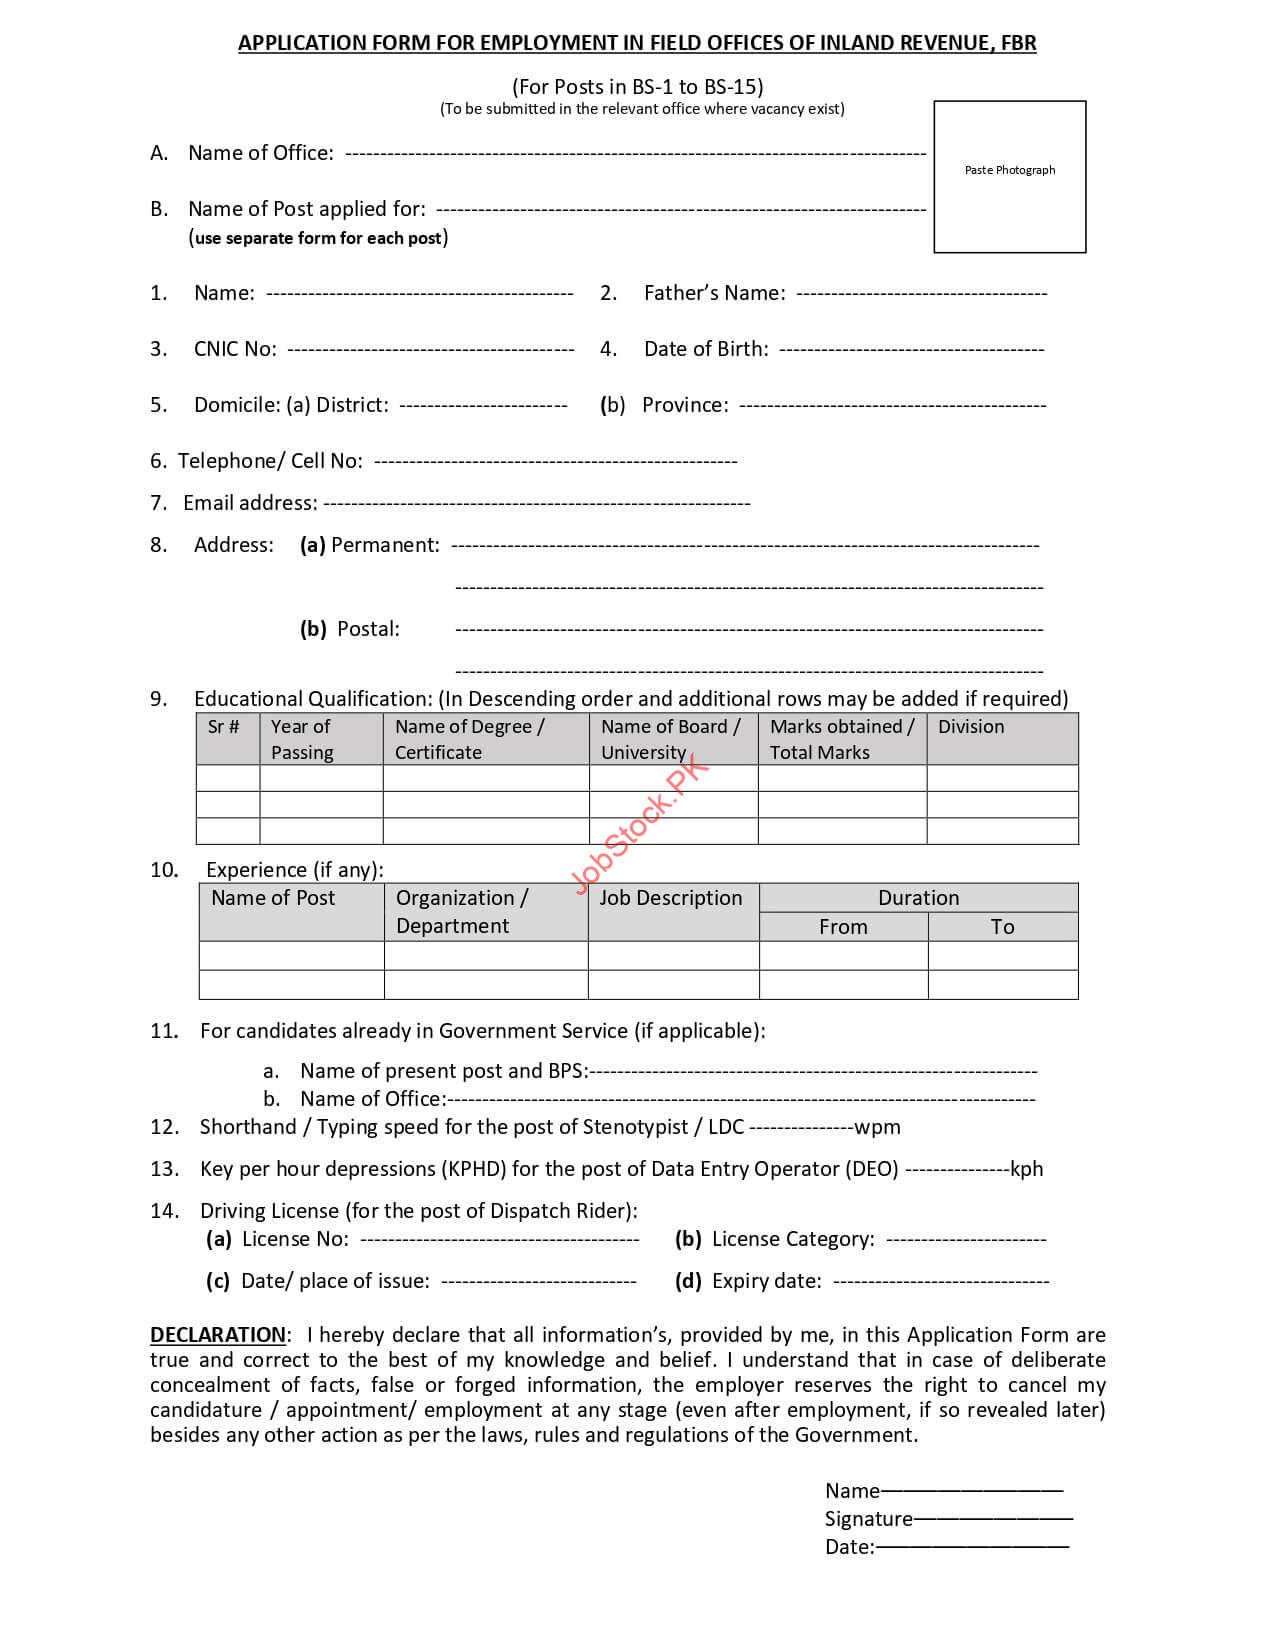 FBR Jobs 2021 Application Form